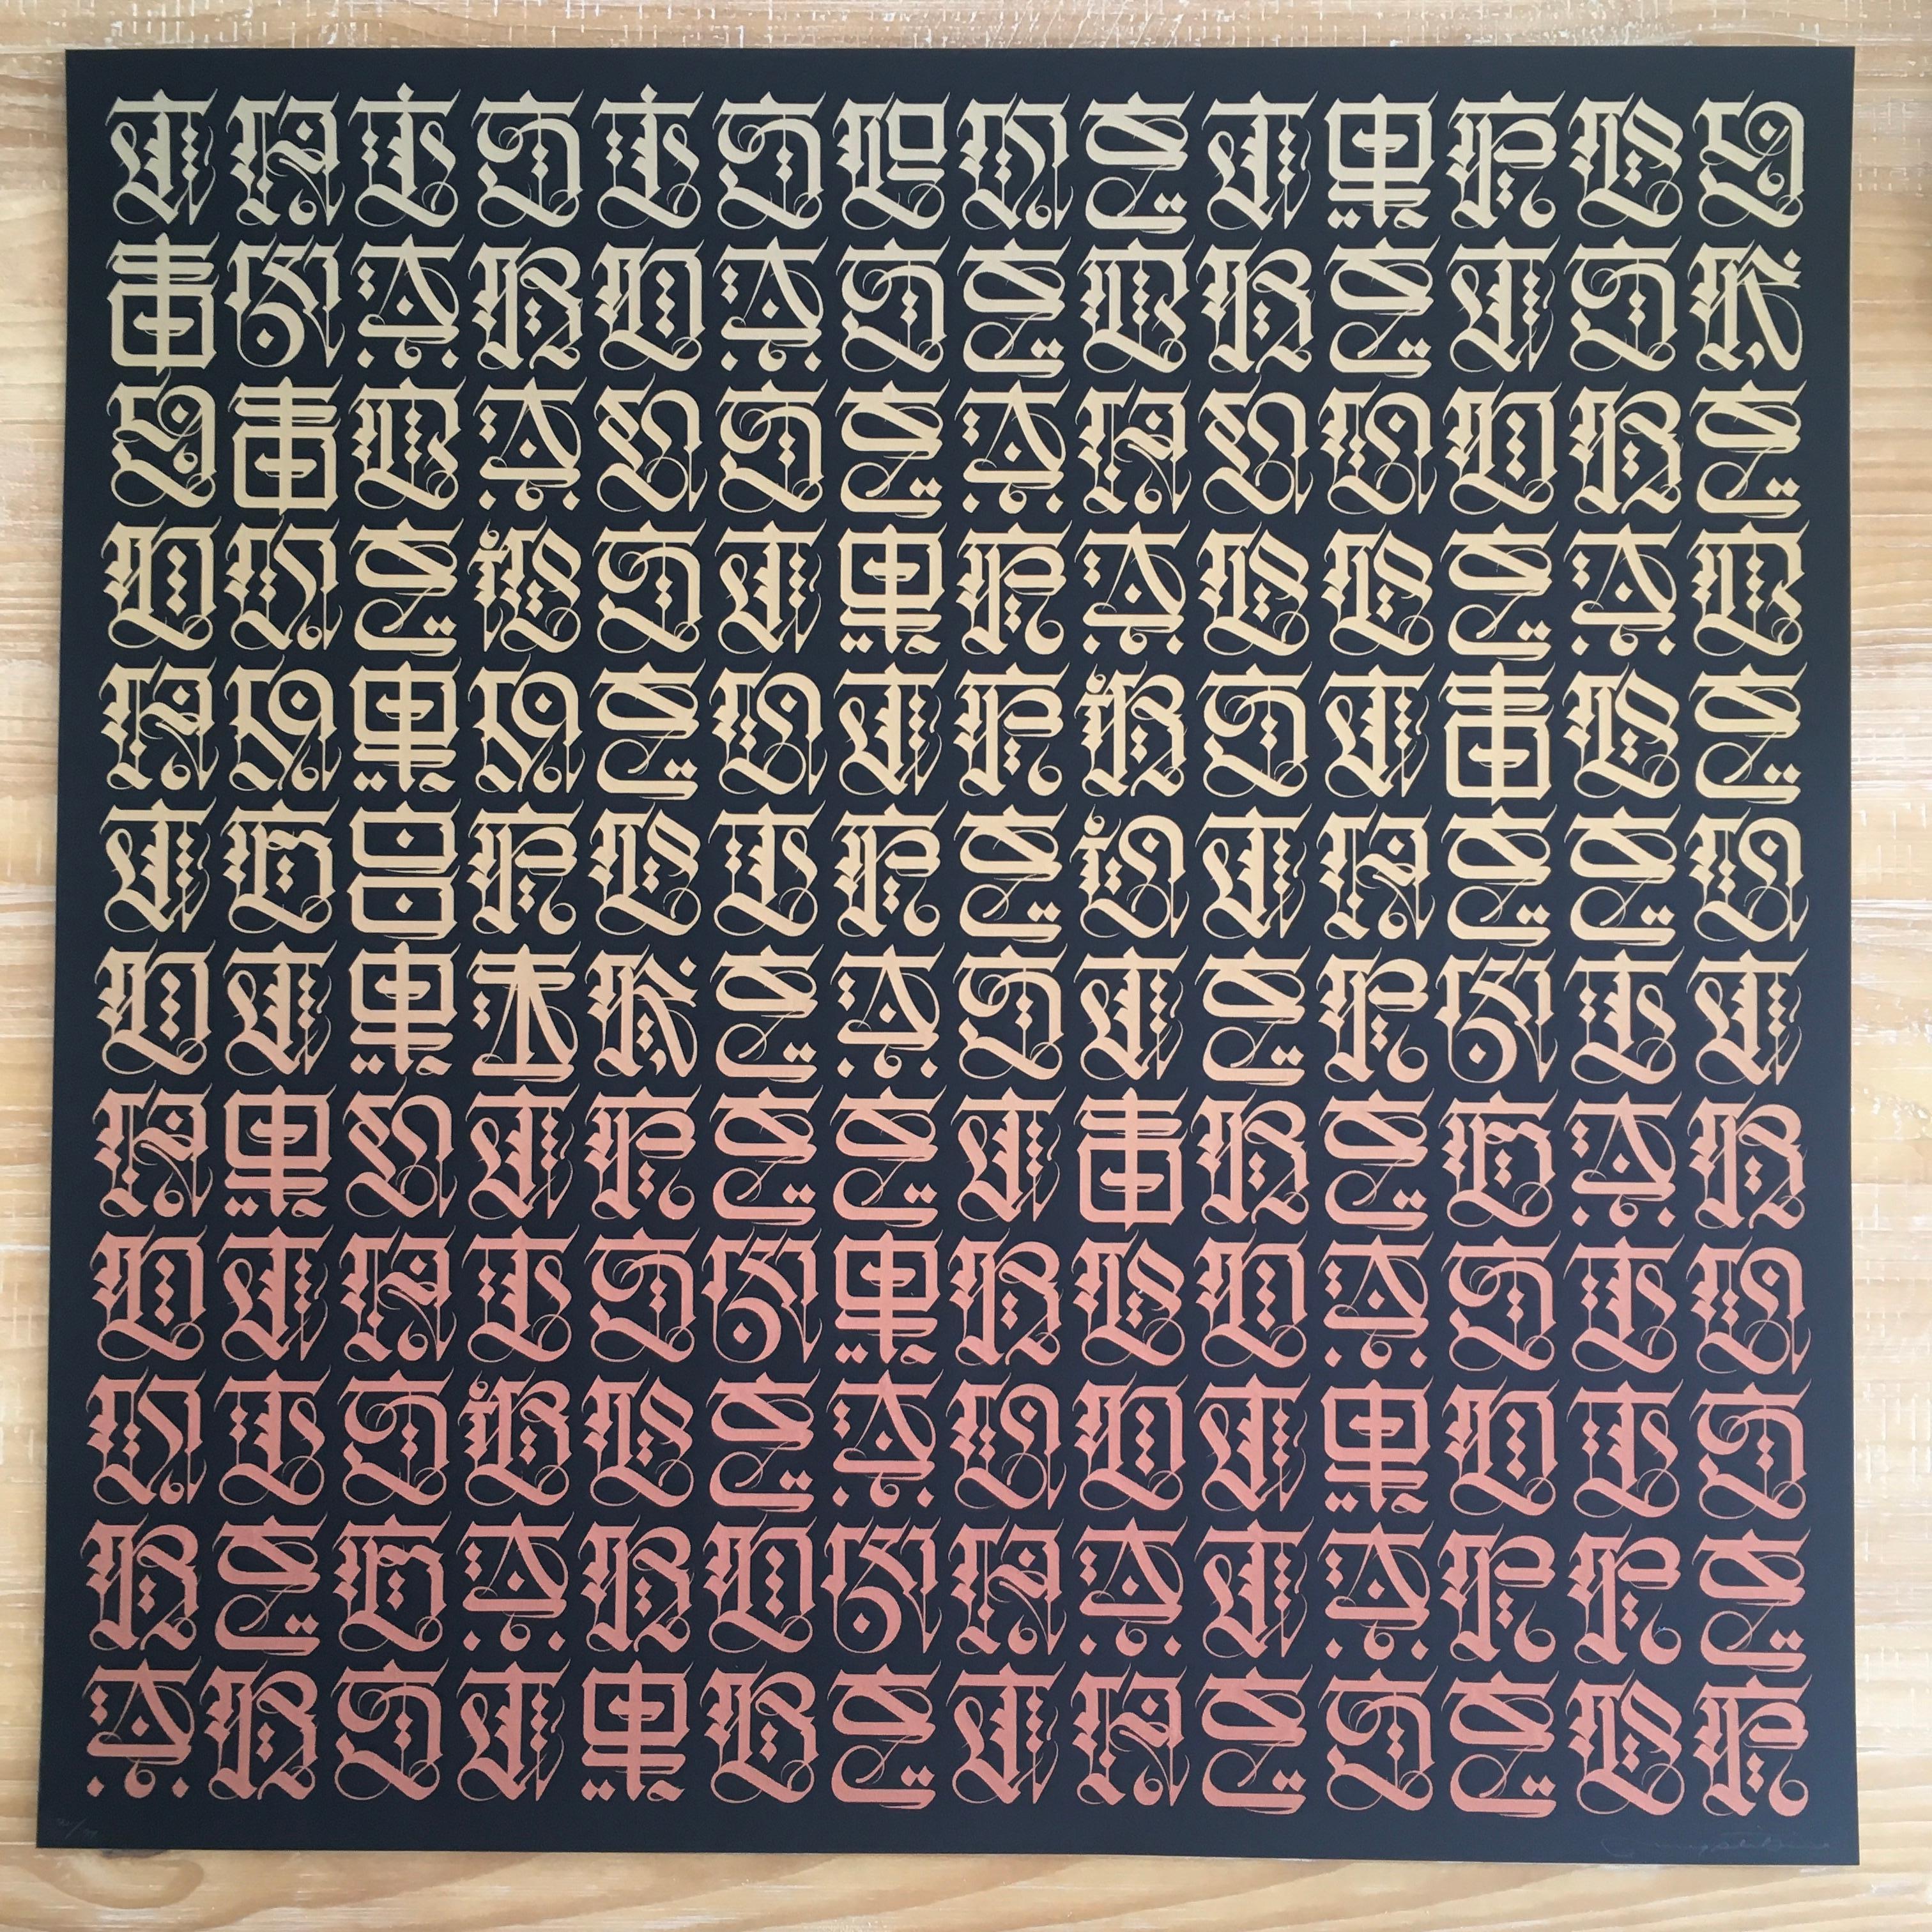 Abstract Print Cryptik - Tirage sérigraphié Loveletter I, édition limitée